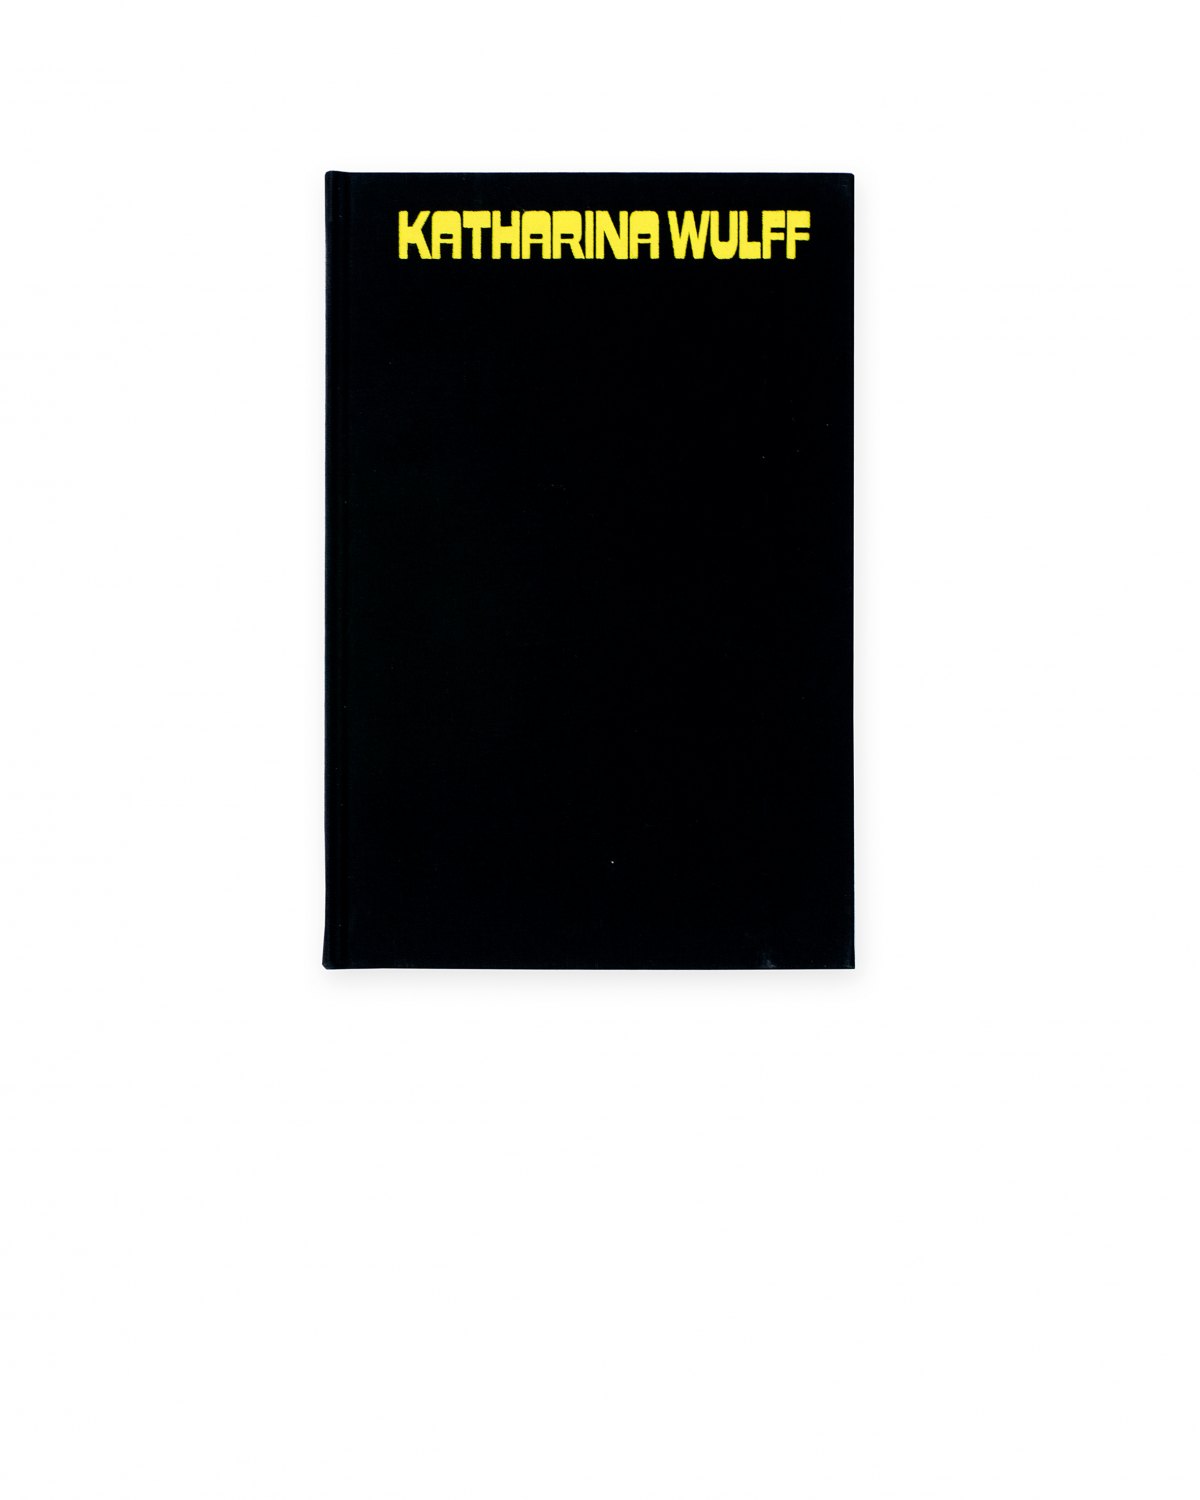 Katharina Wulff, Katharina Wulff Catalogue, The Douglas Hyde Gallery, Dublin 2006.  ISBN 978-1-90539-700-3